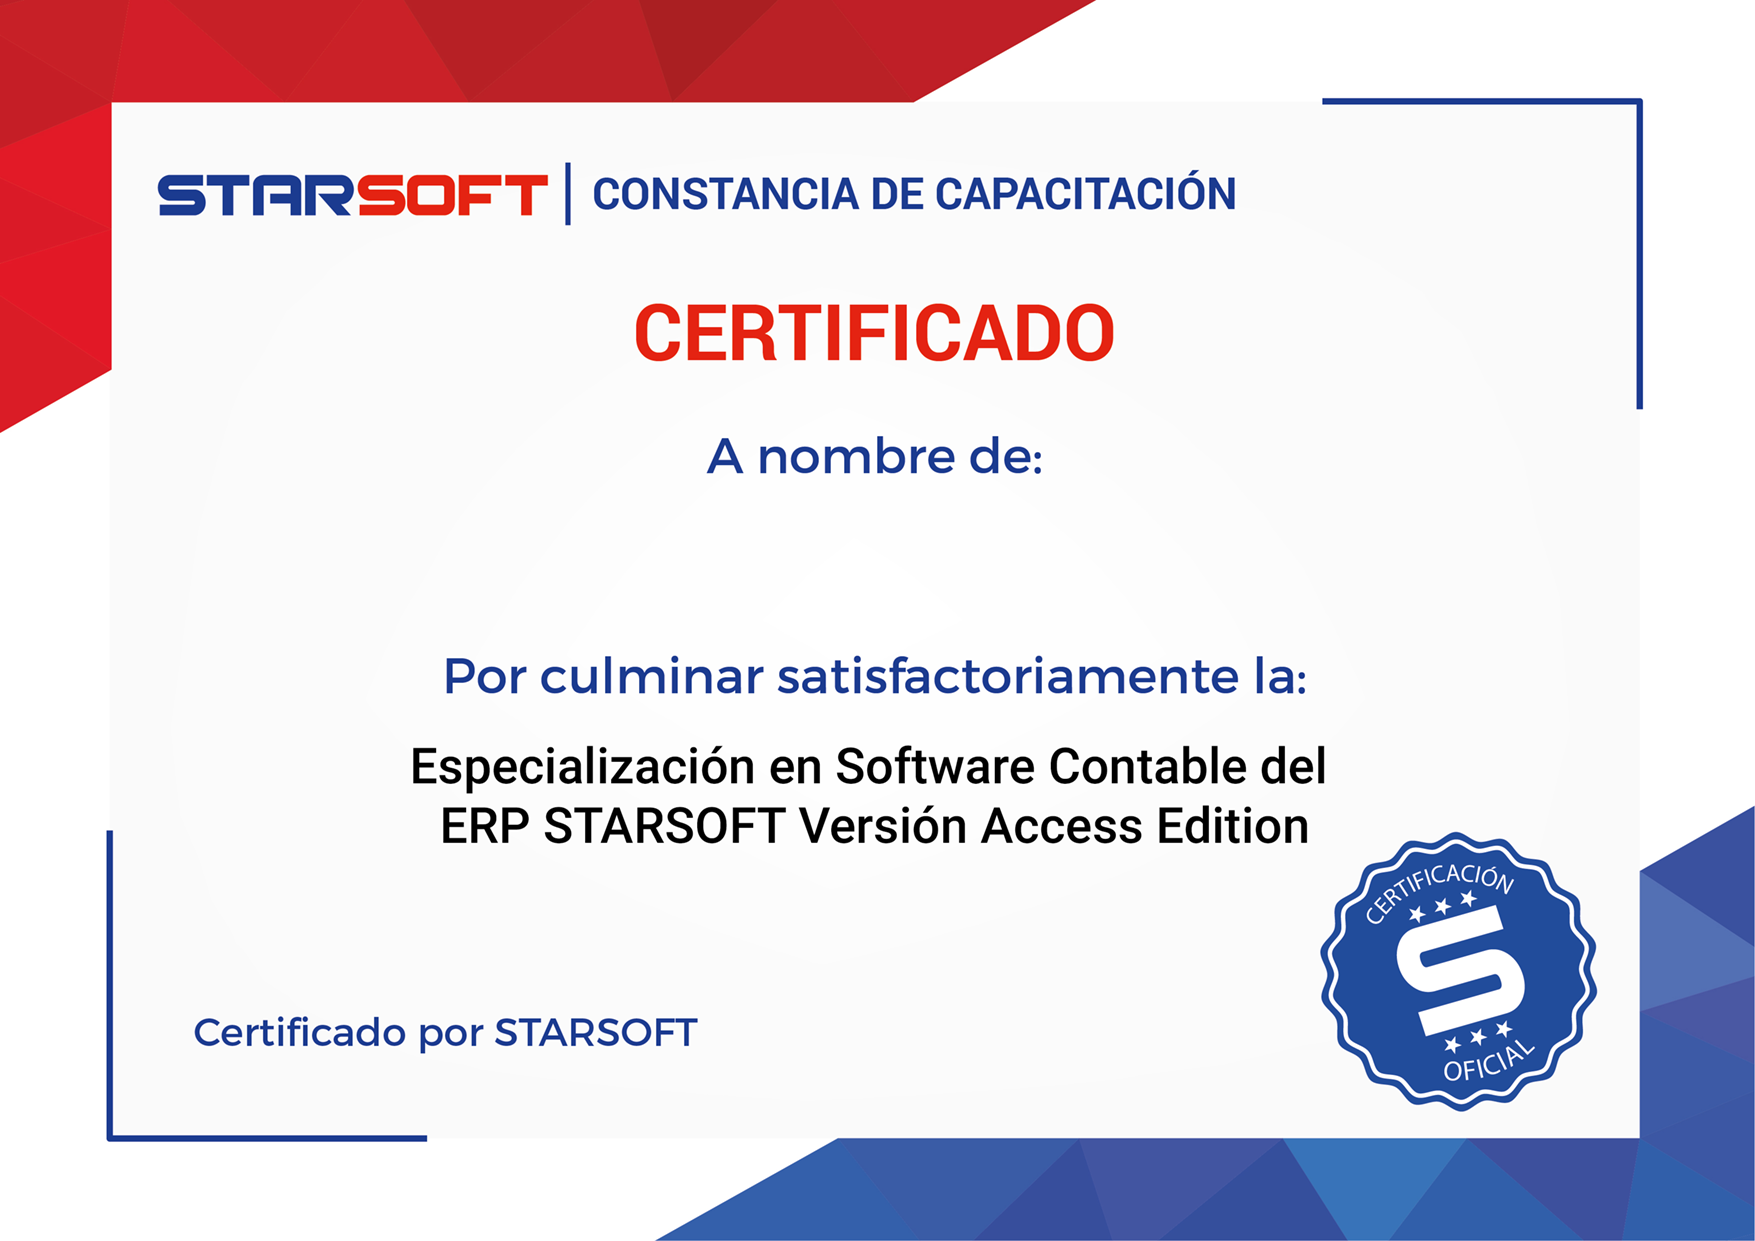 STARSOFT | Especialización en Software Contable